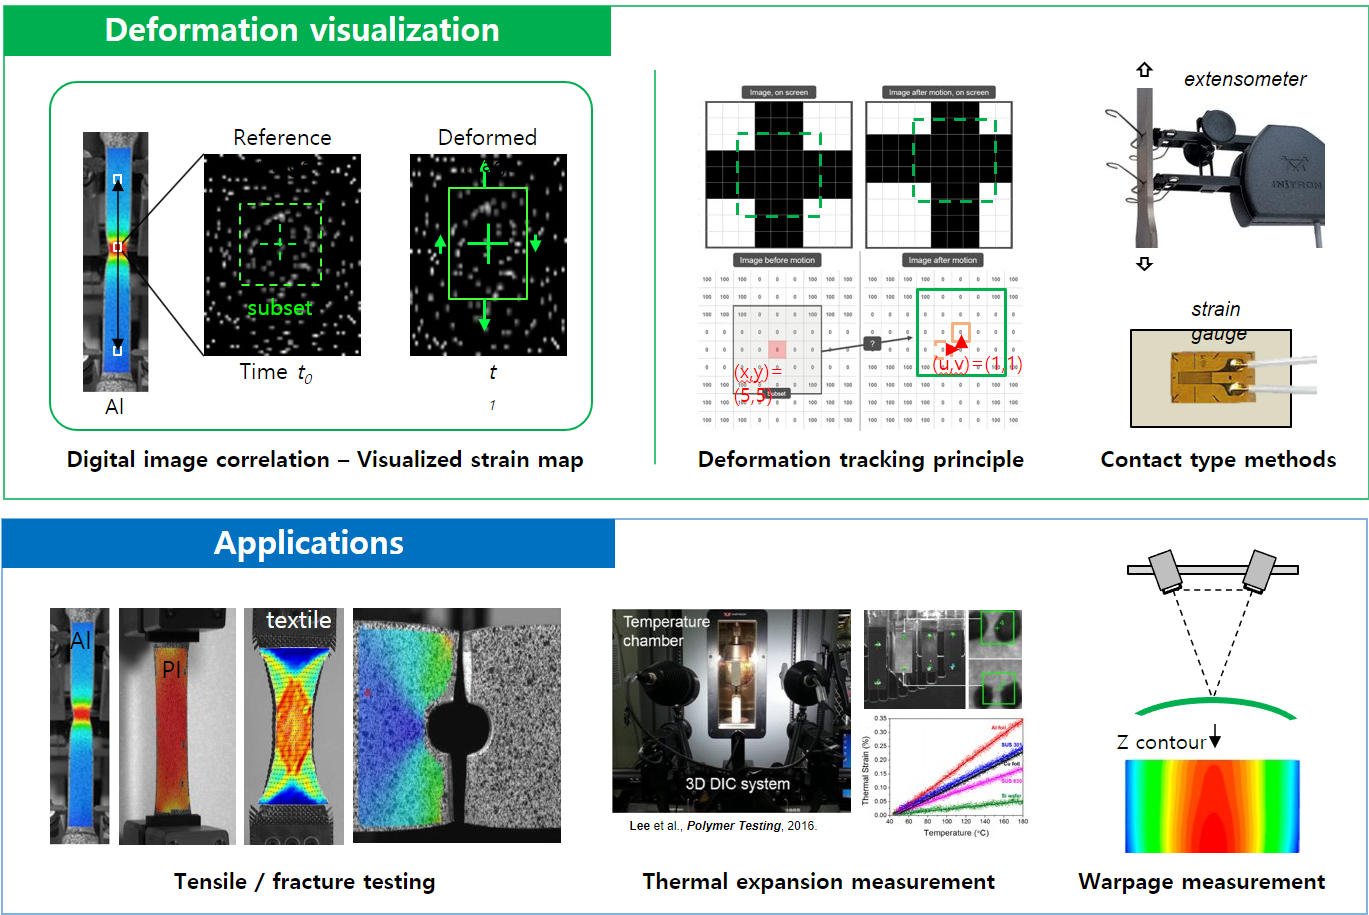 Deformation visualization using digital image correlation